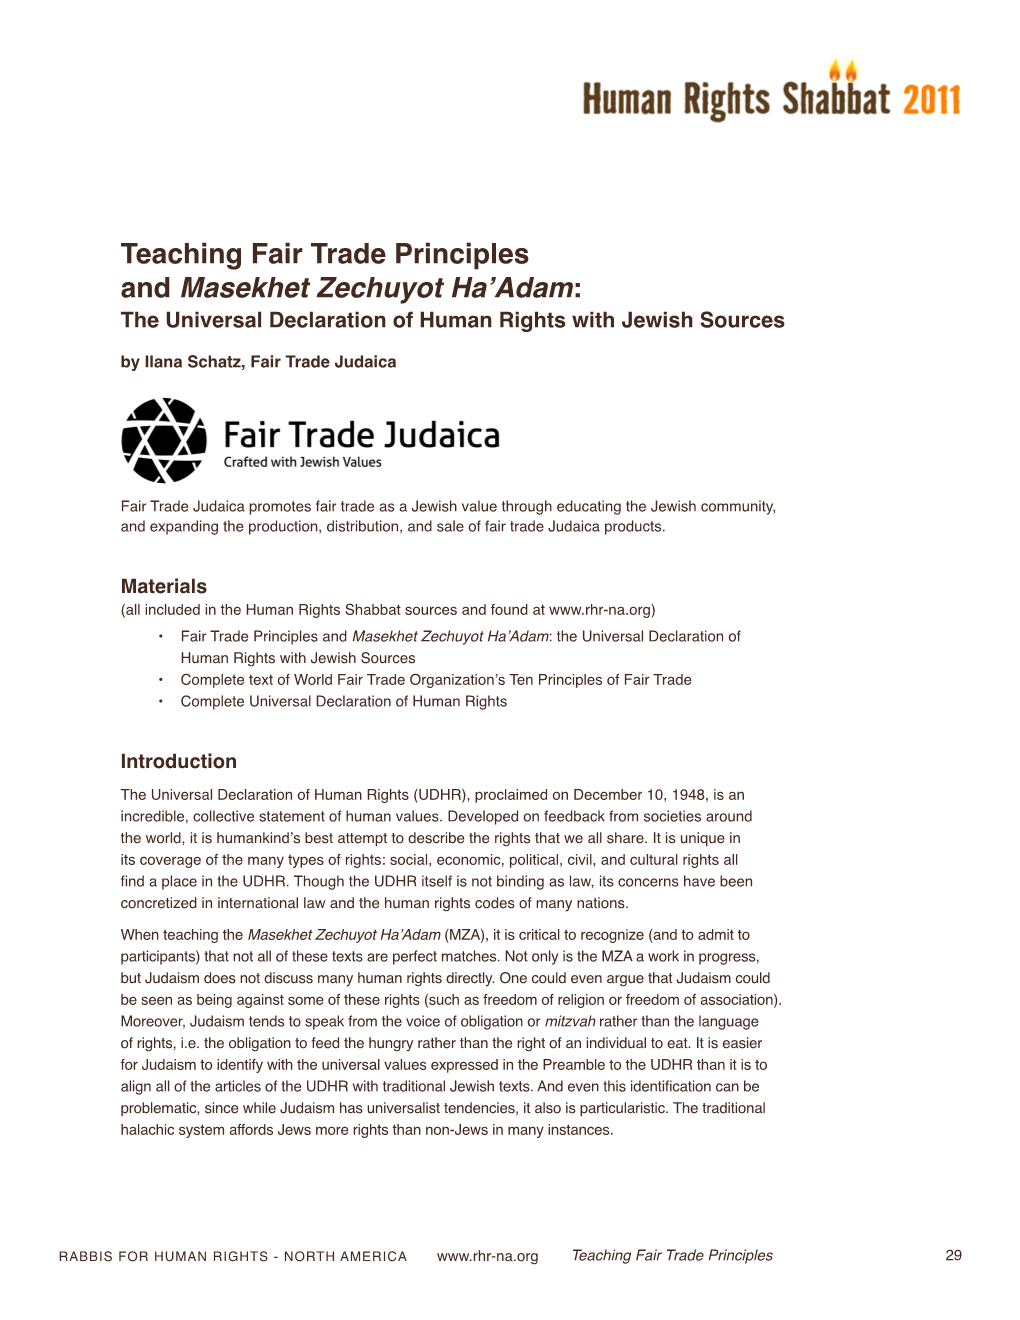 Teaching Fair Trade Principles and Masekhet Zechuyot Ha'adam